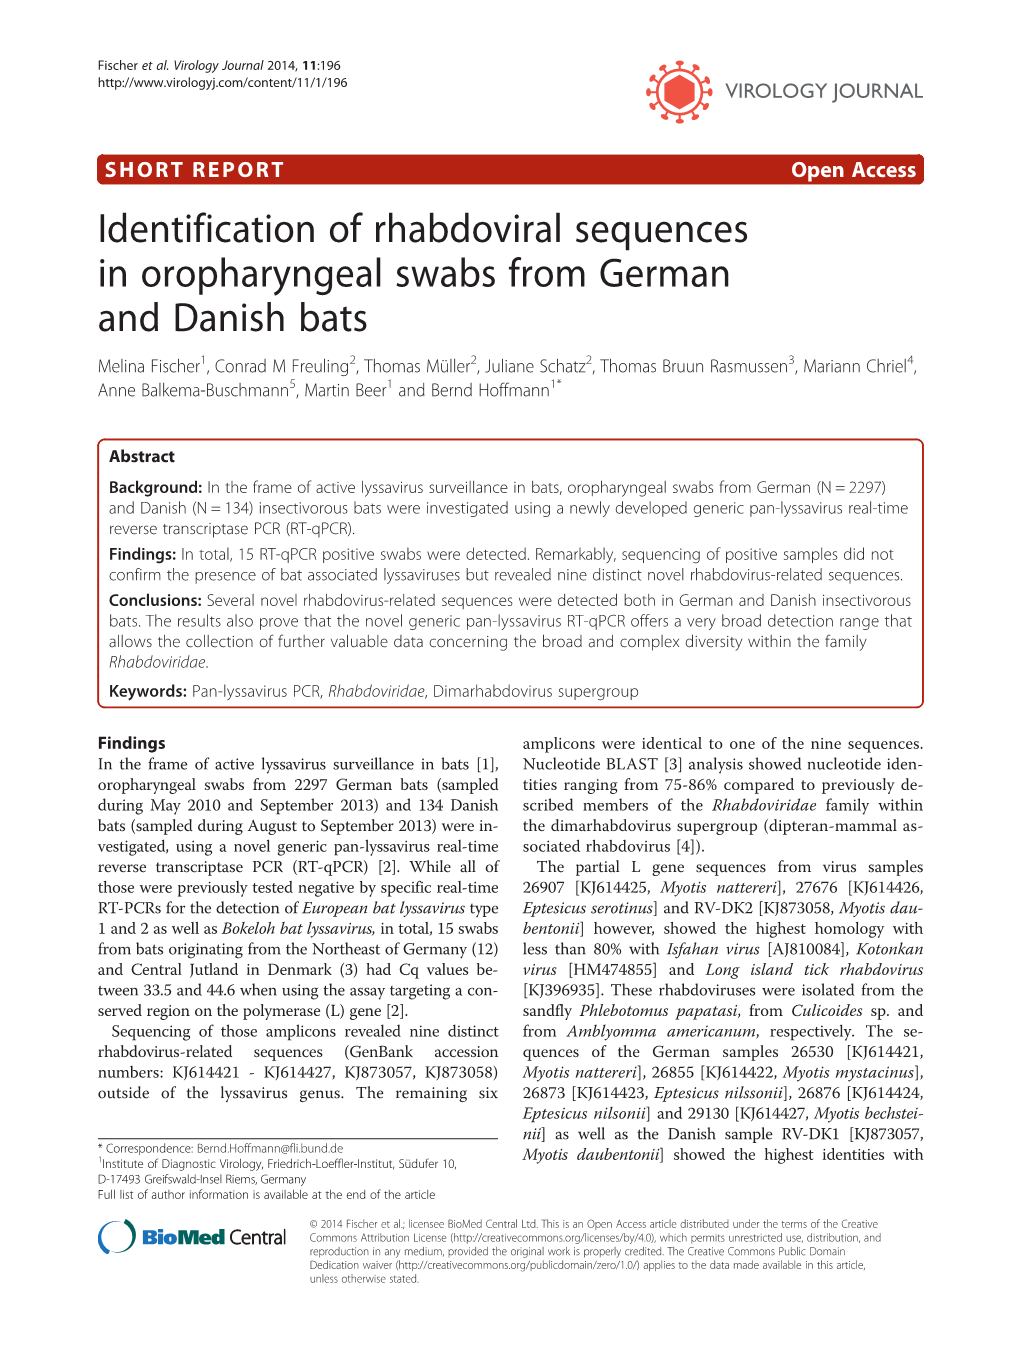 Identification of Rhabdoviral Sequences in Oropharyngeal Swabs